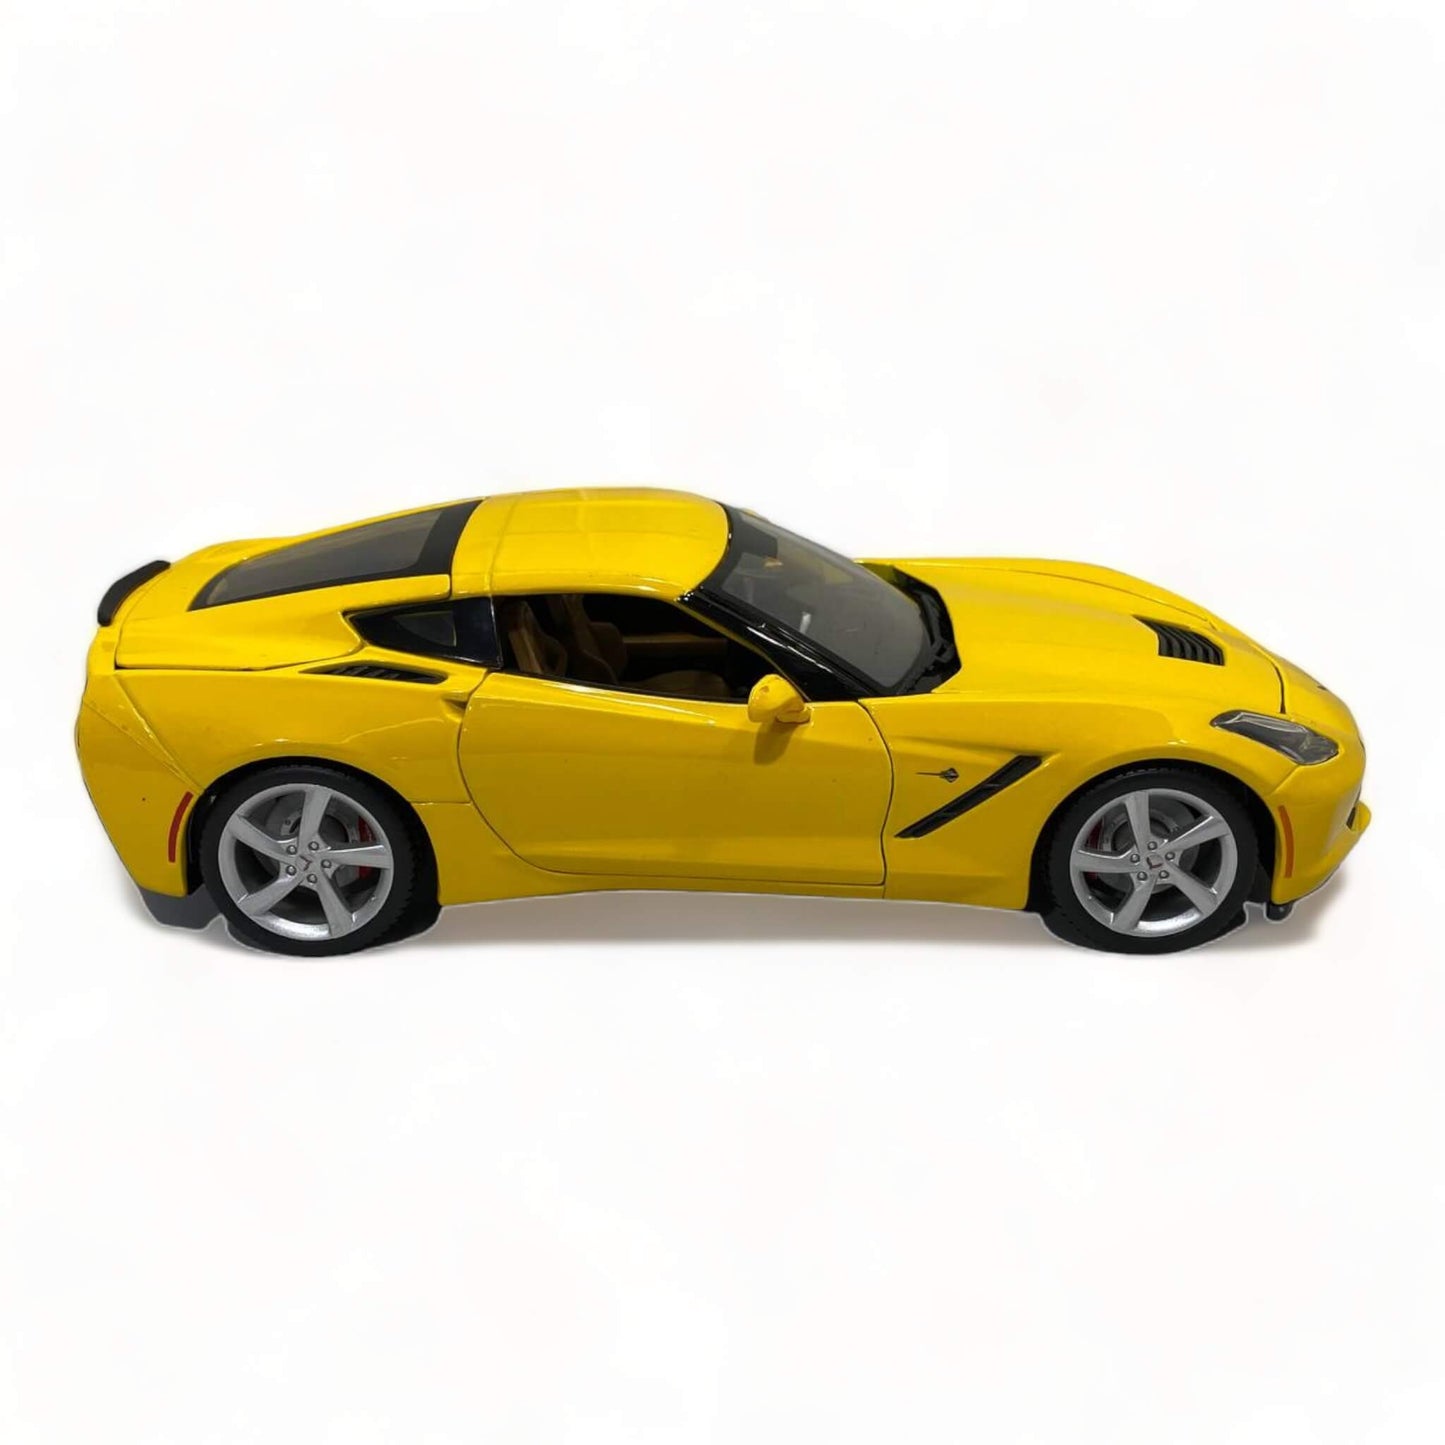 1/18 Diecast Maisto Chevrolet Corvette Stingray Yellow 2014 Scale Model Car|Sold in Dturman.com Dubai UAE.